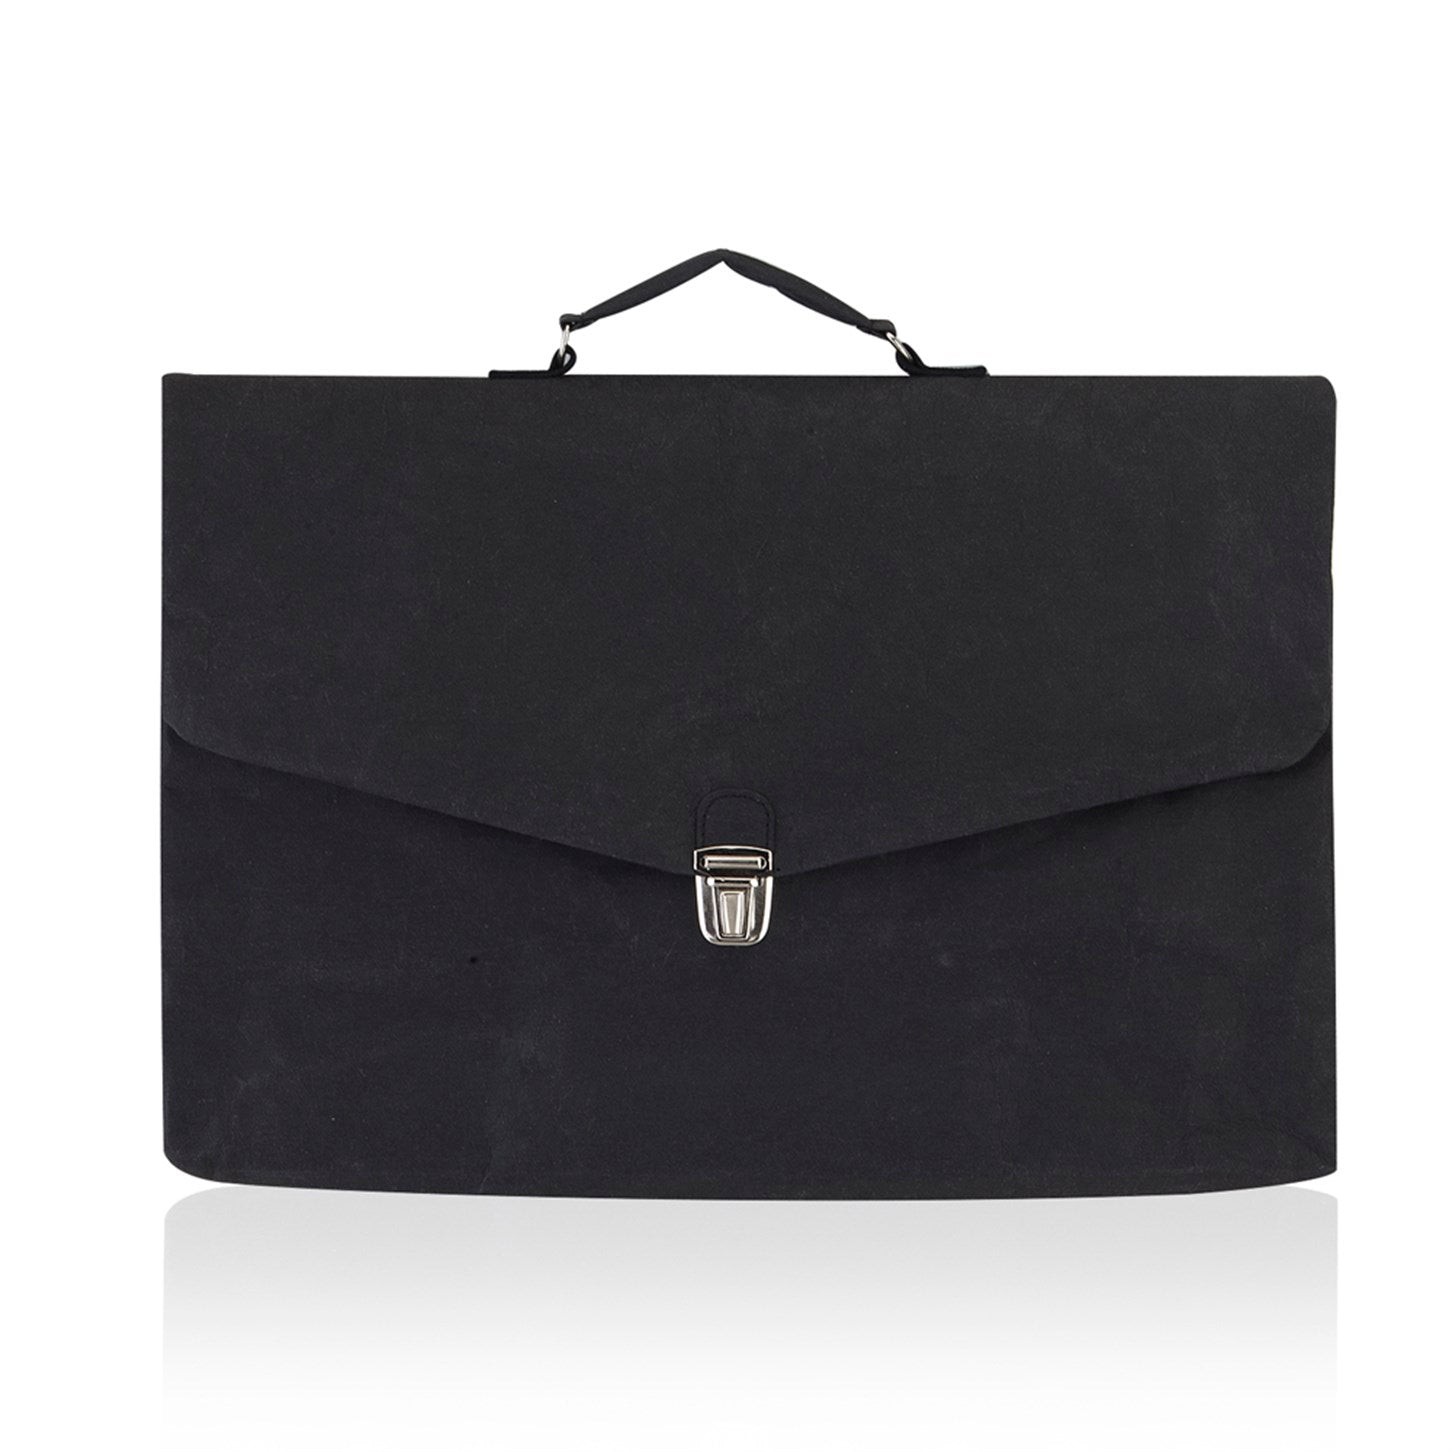 Epidotte Business Bag Black